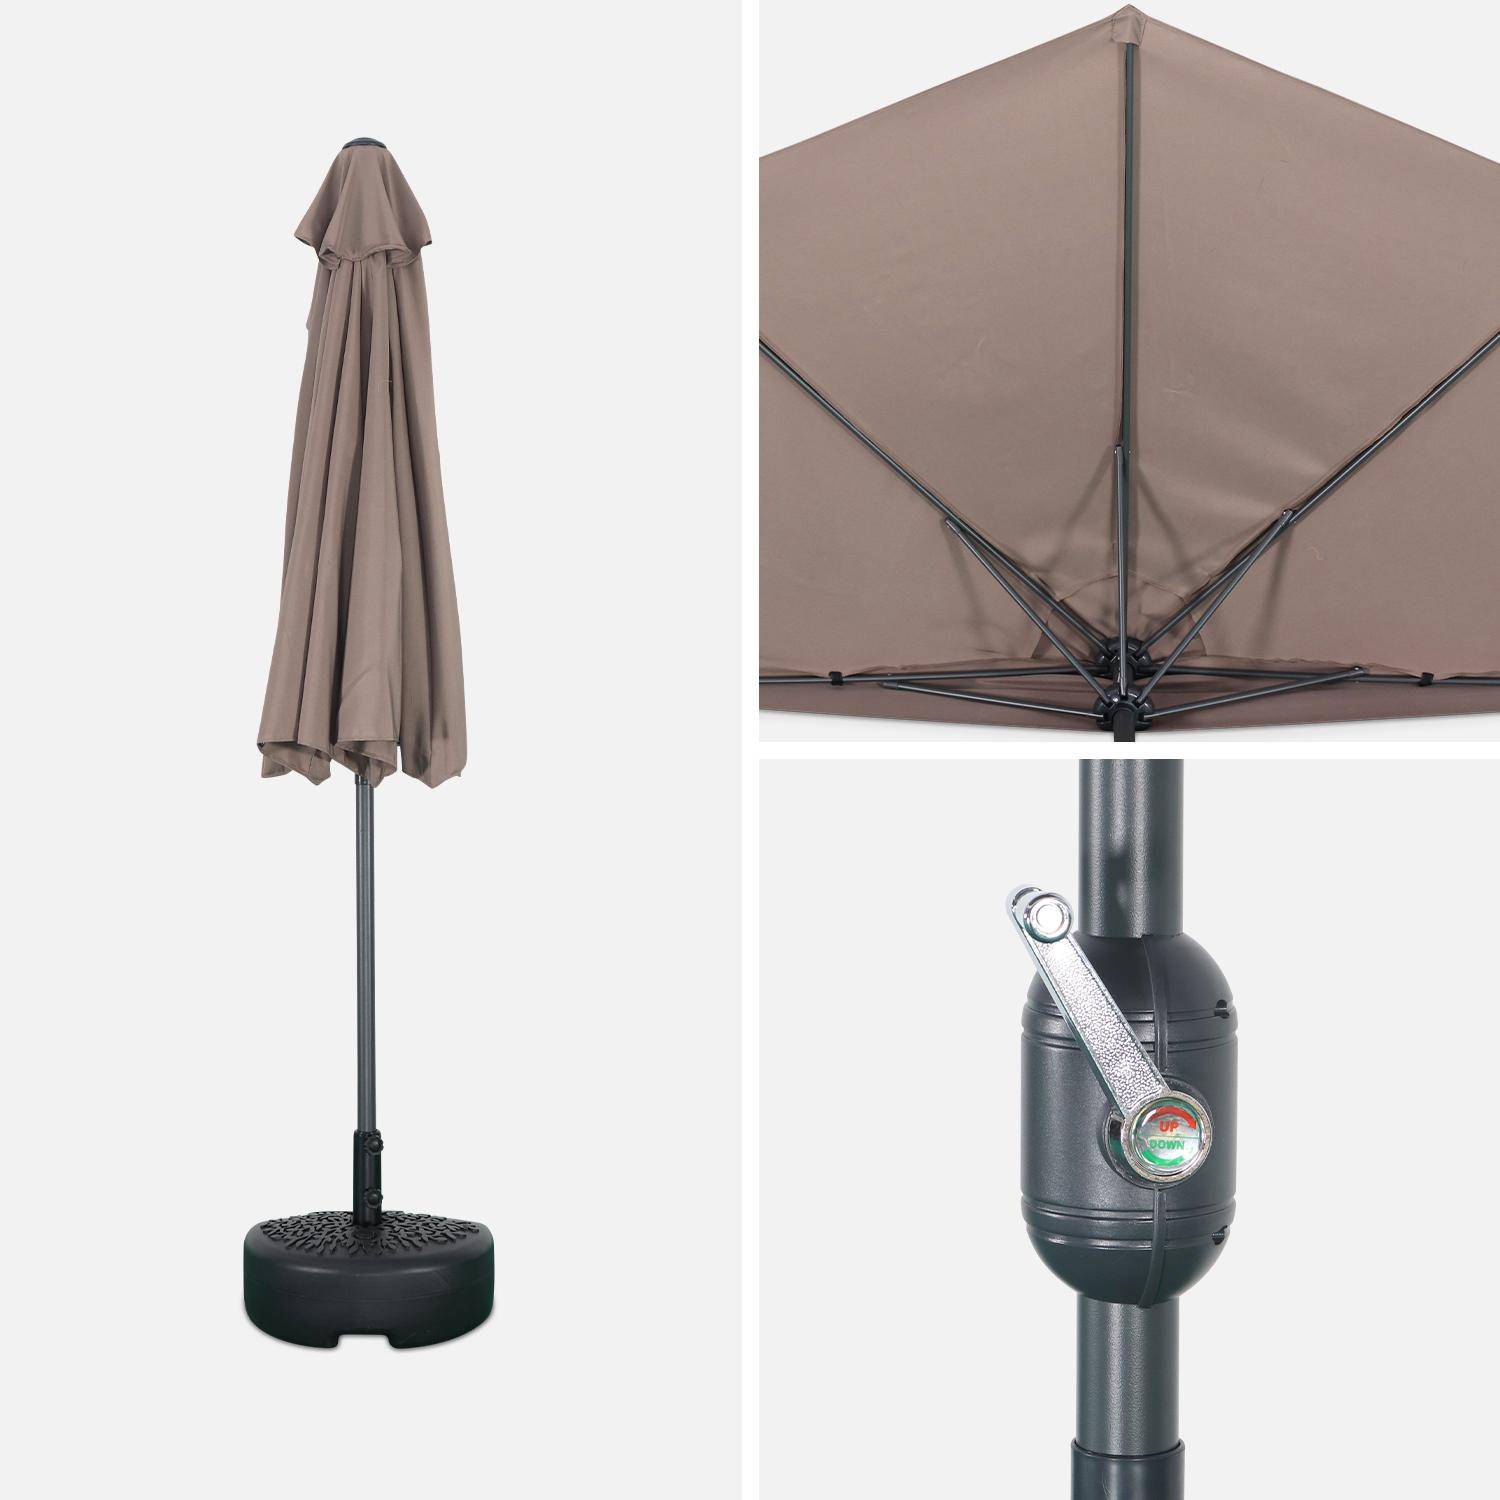 Ø250cm Half parasol for balcony - half-parasol, aluminium pole, crank - Calvi - Beige-brown Photo5